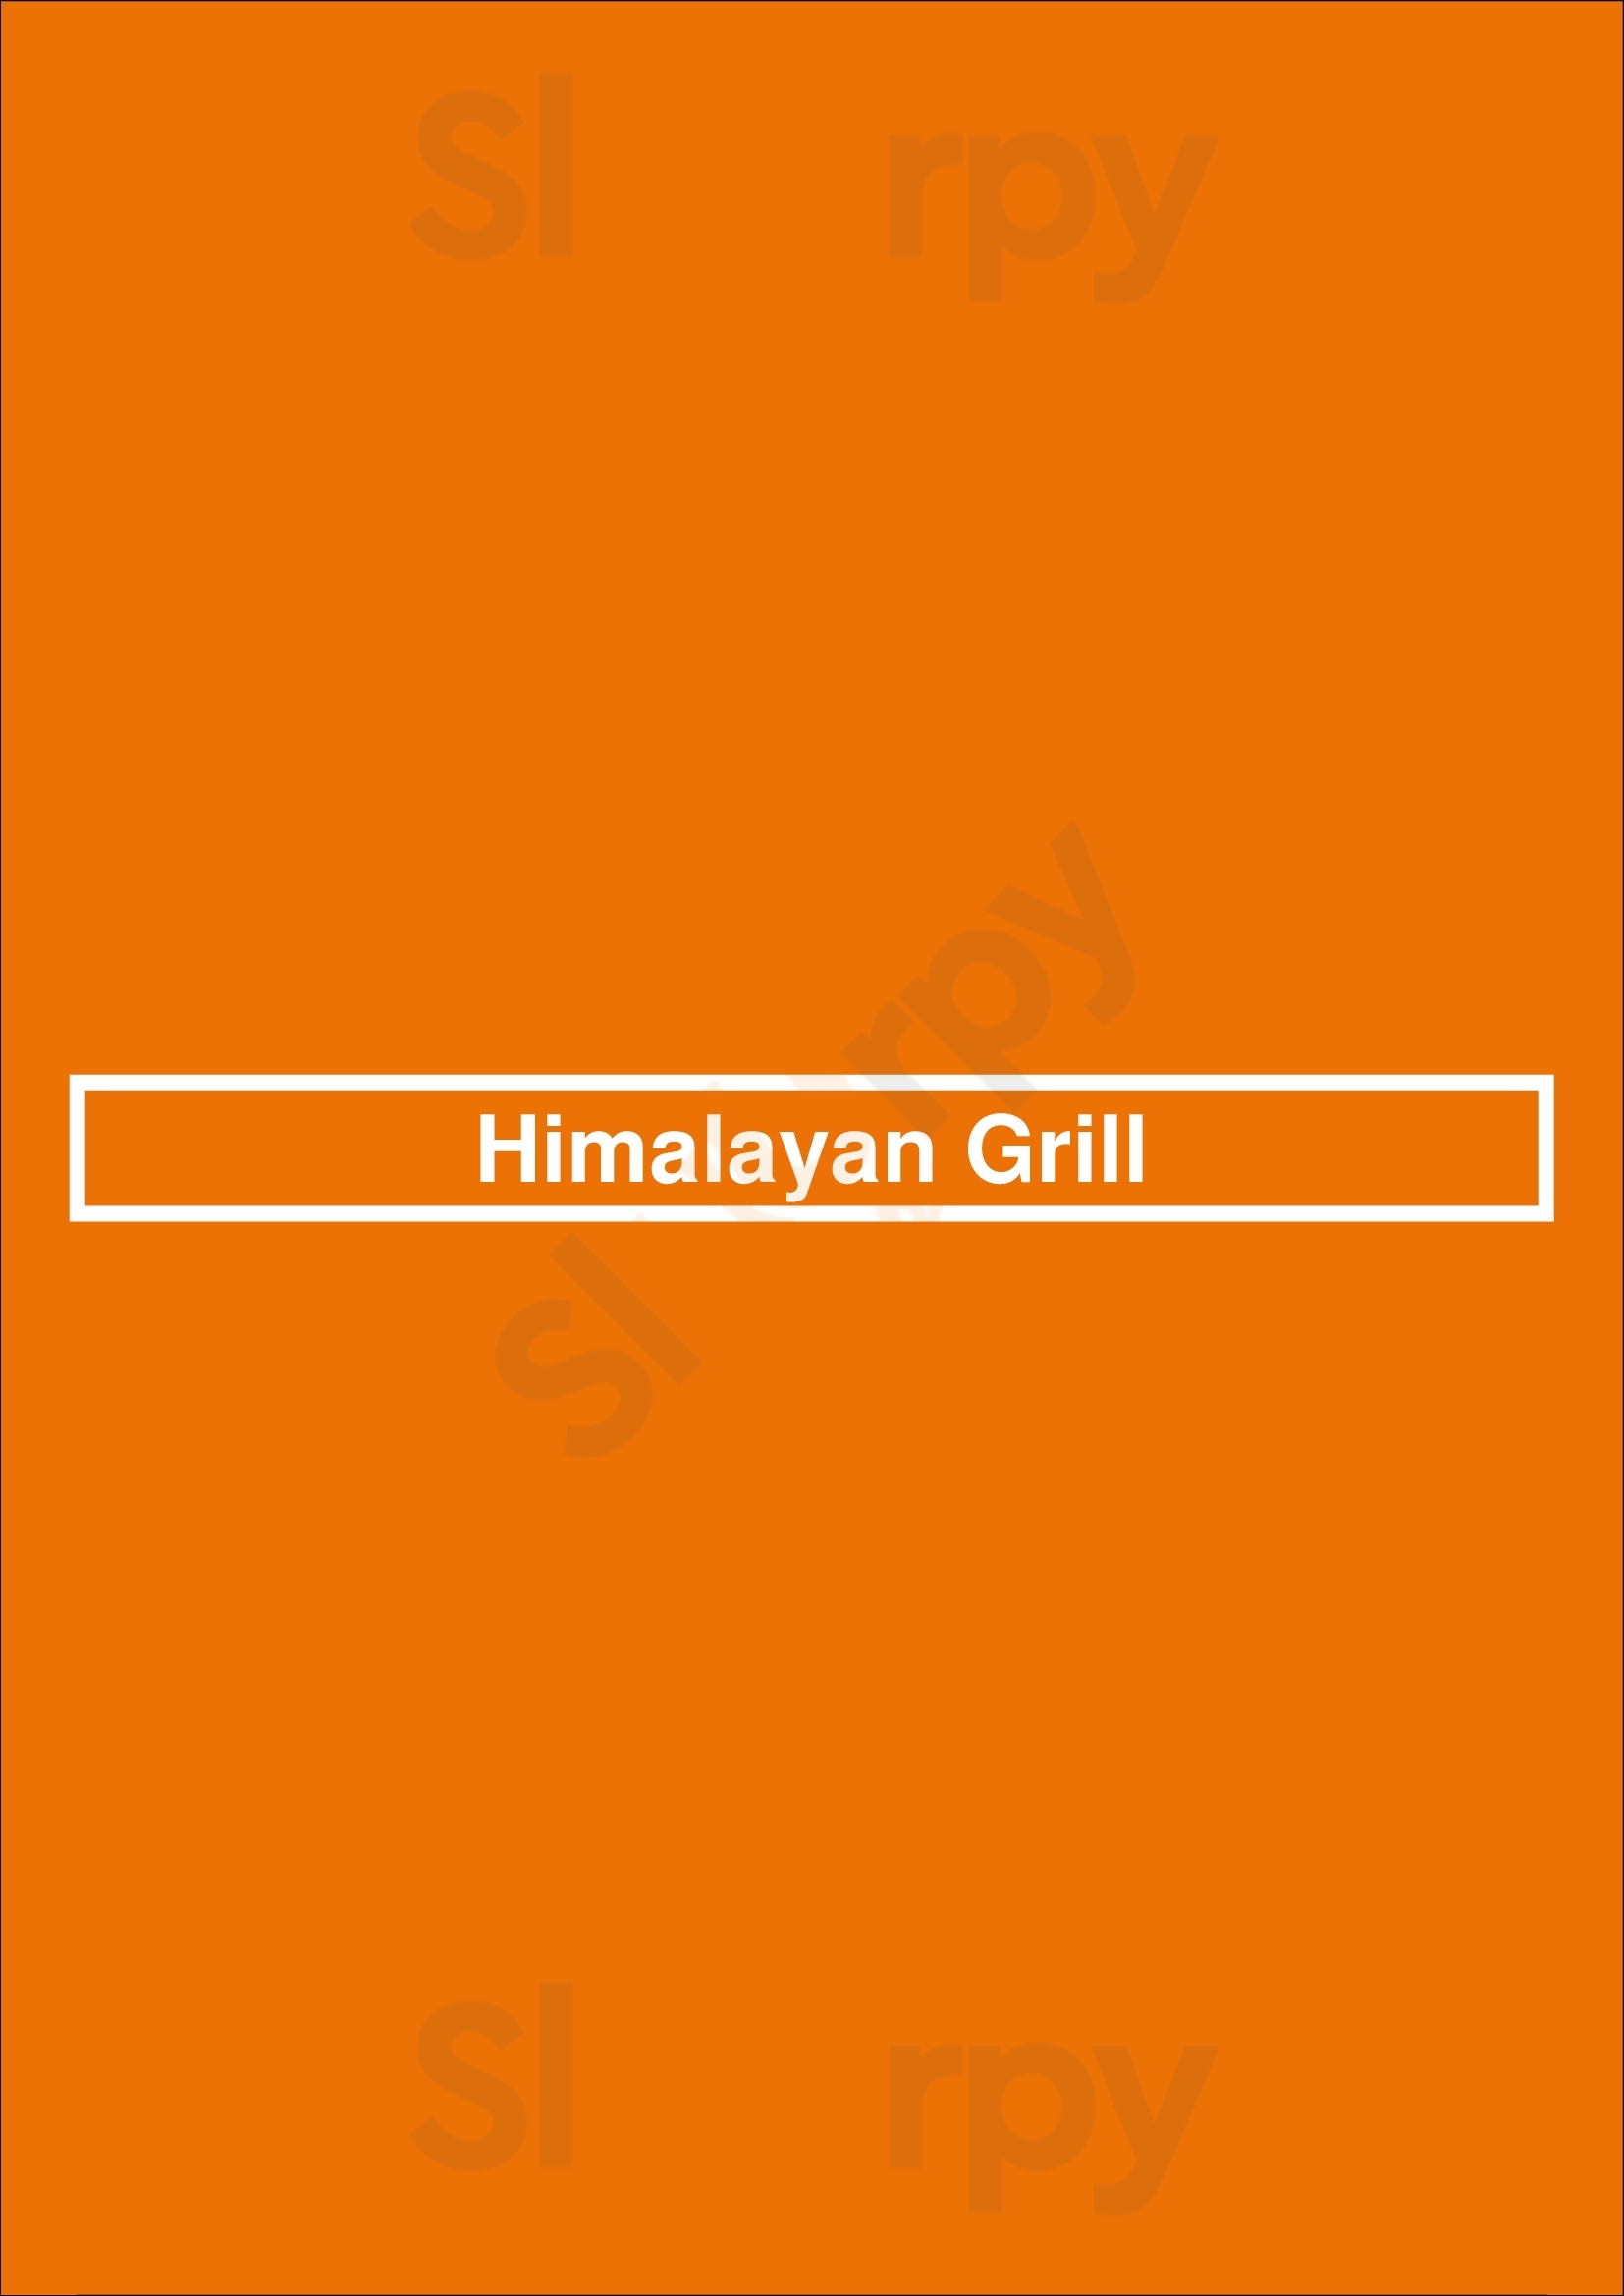 Himalayan Grill Waterfront Huntington Beach Menu - 1